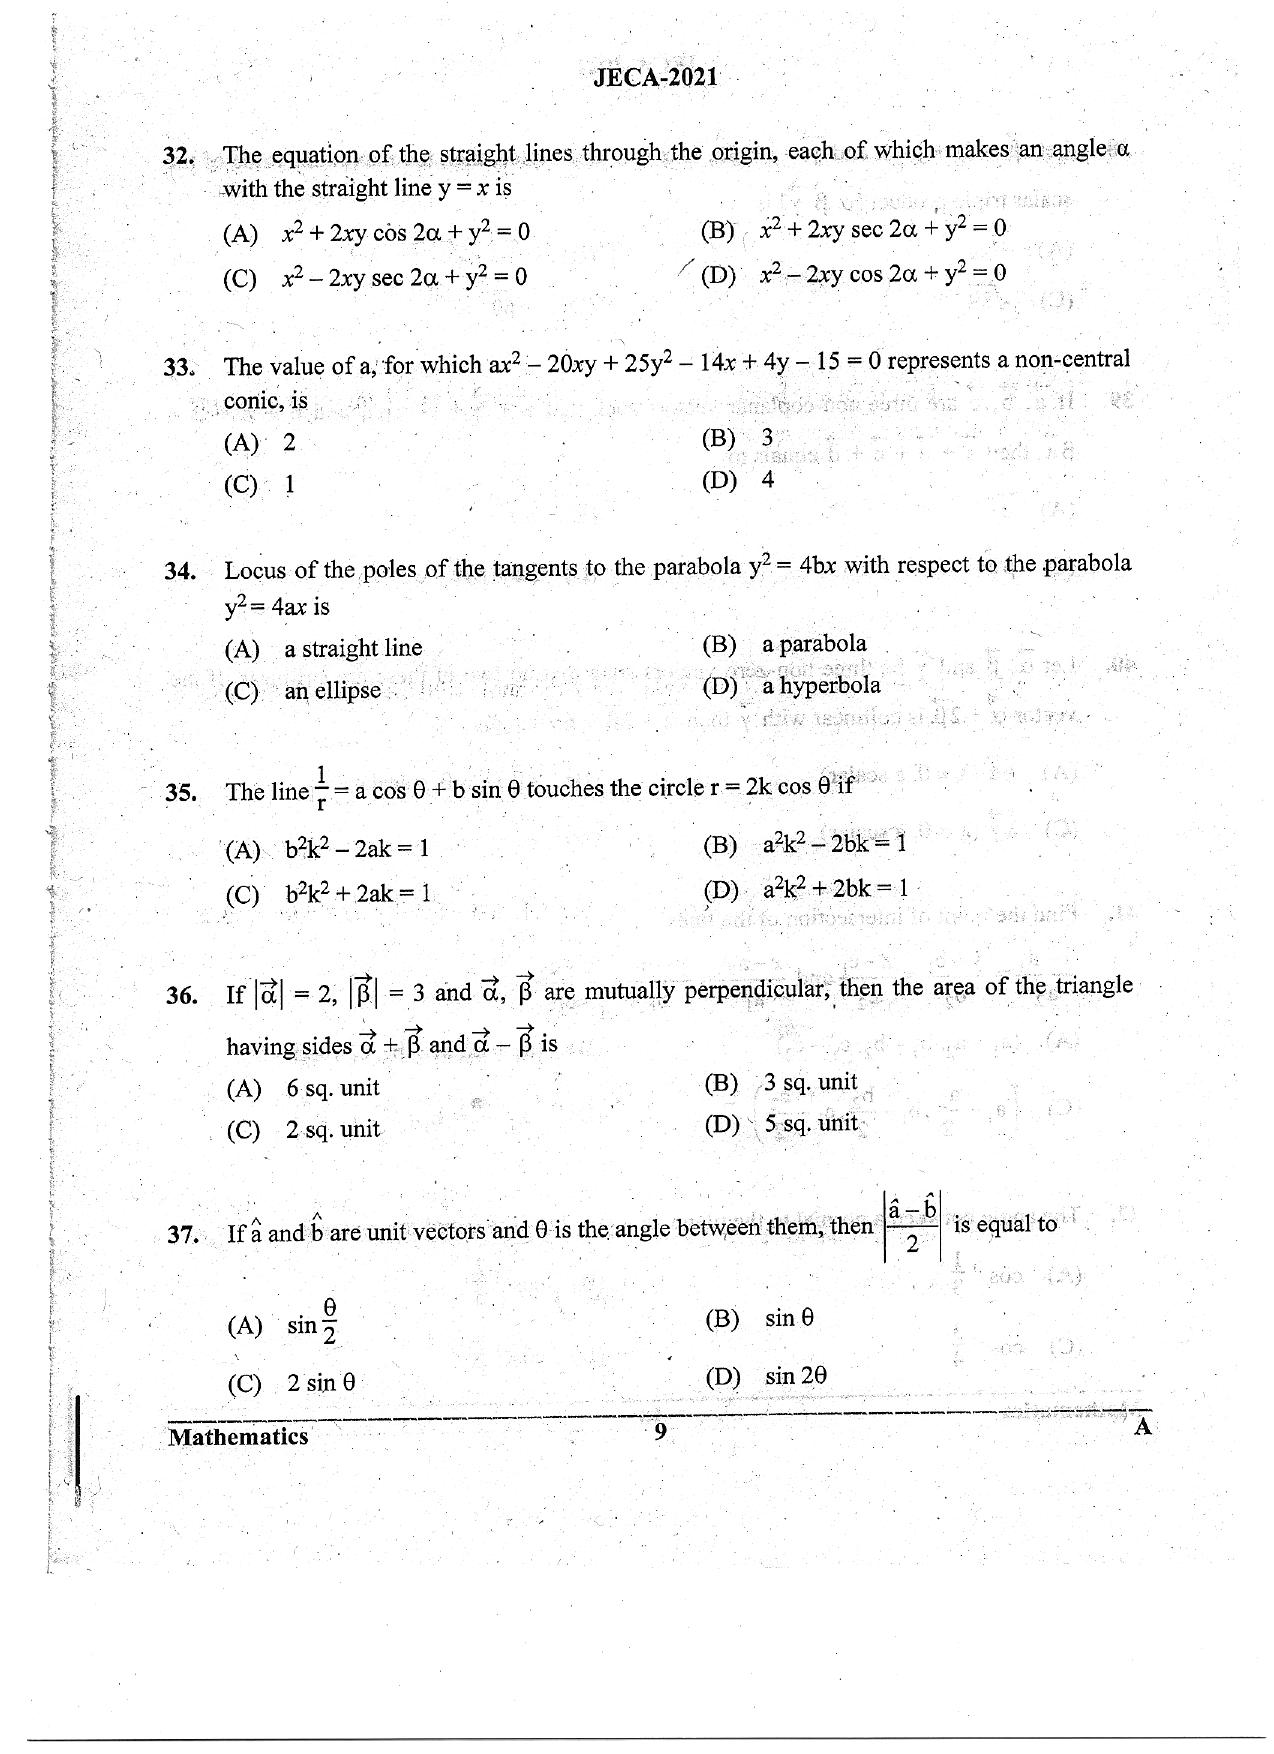 WB JECA 2021 Mathematics Question Paper - Page 9